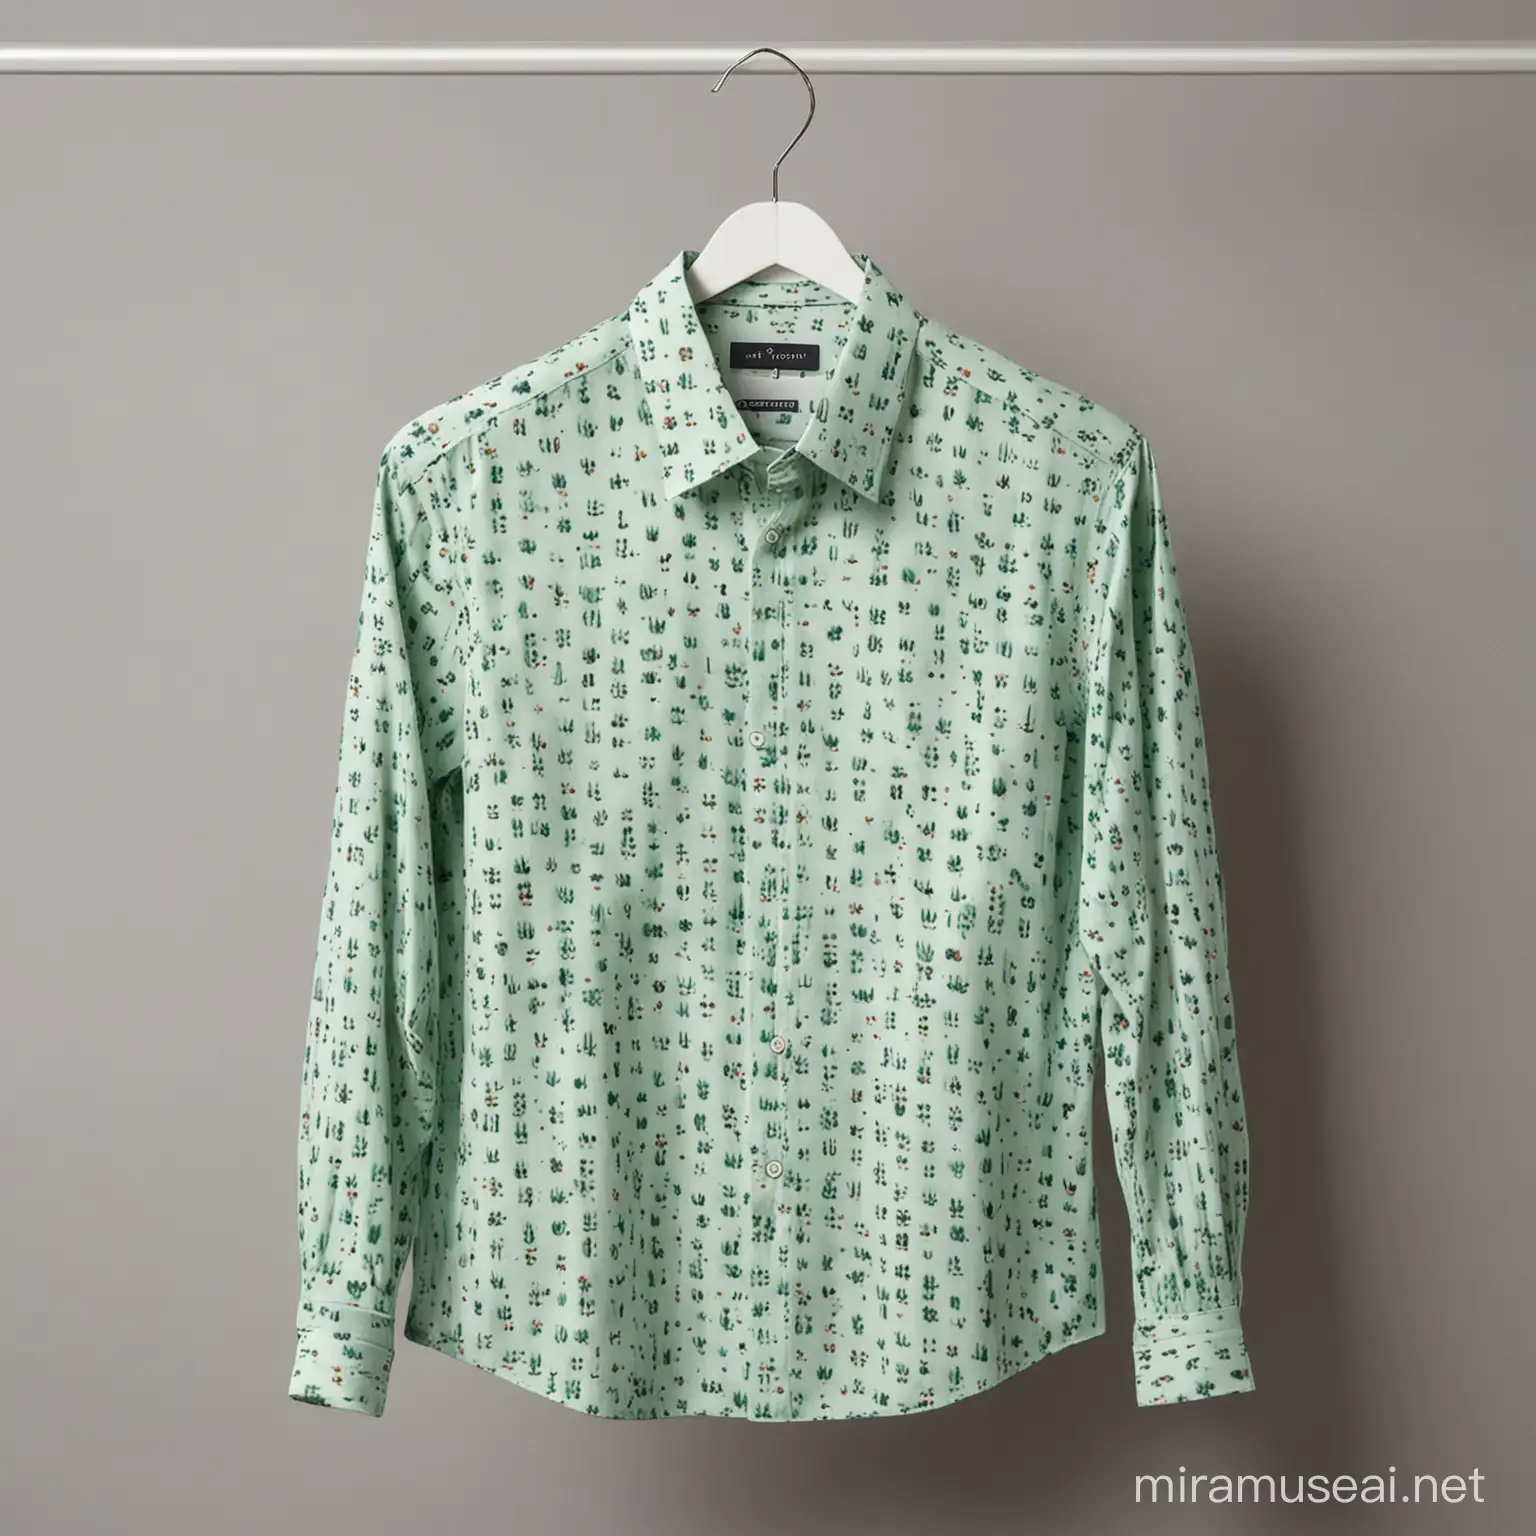 Elegant Micro Cactus Print Green Shirt on Hanger